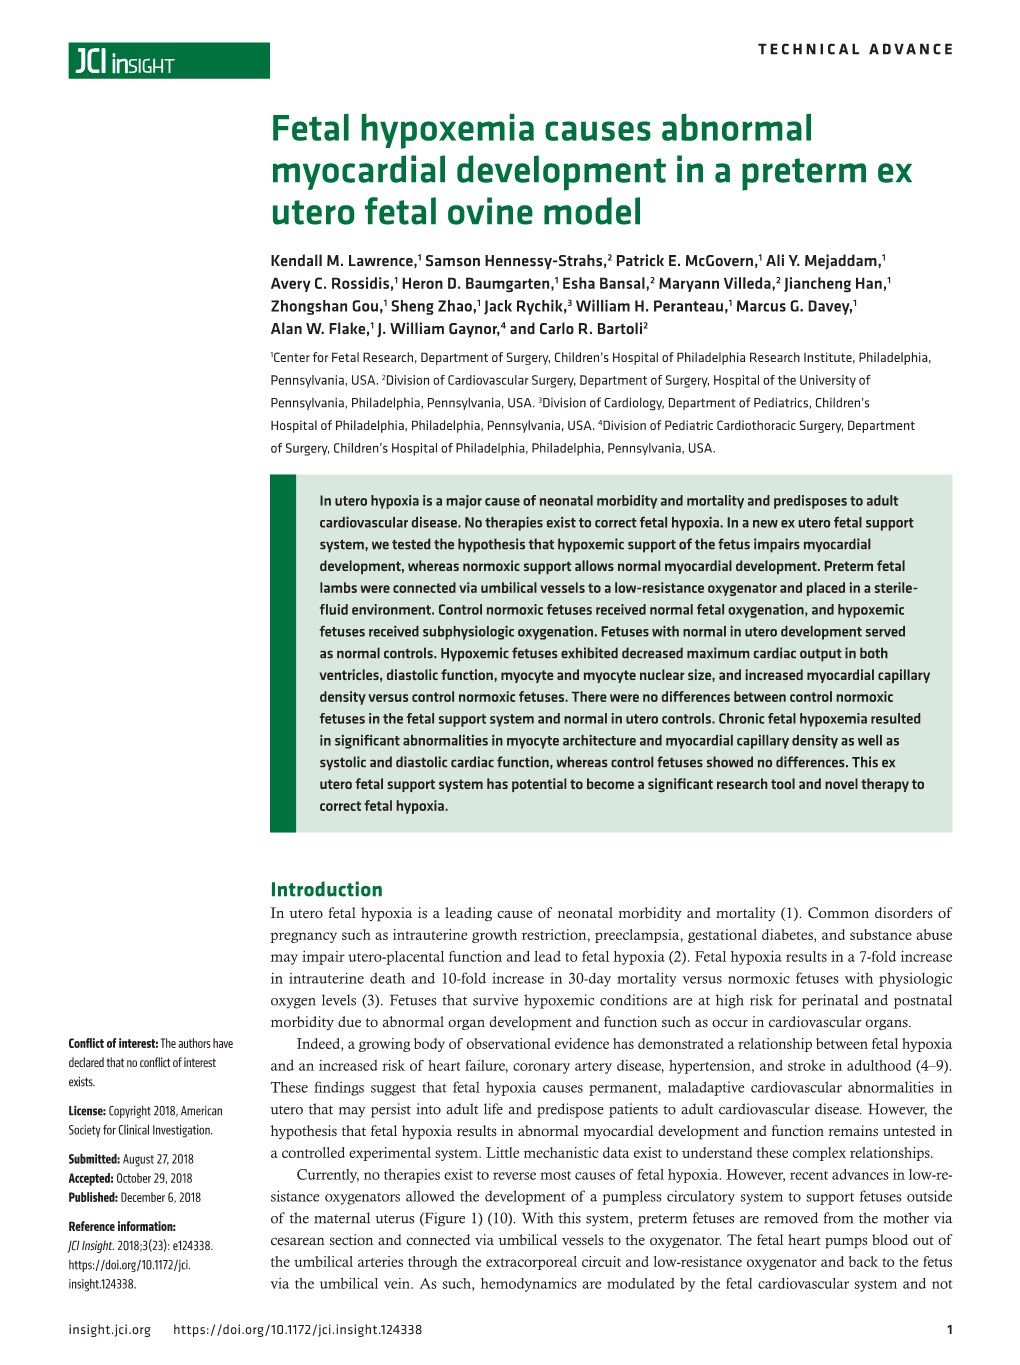 Fetal Hypoxemia Causes Abnormal Myocardial Development in a Preterm Ex Utero Fetal Ovine Model